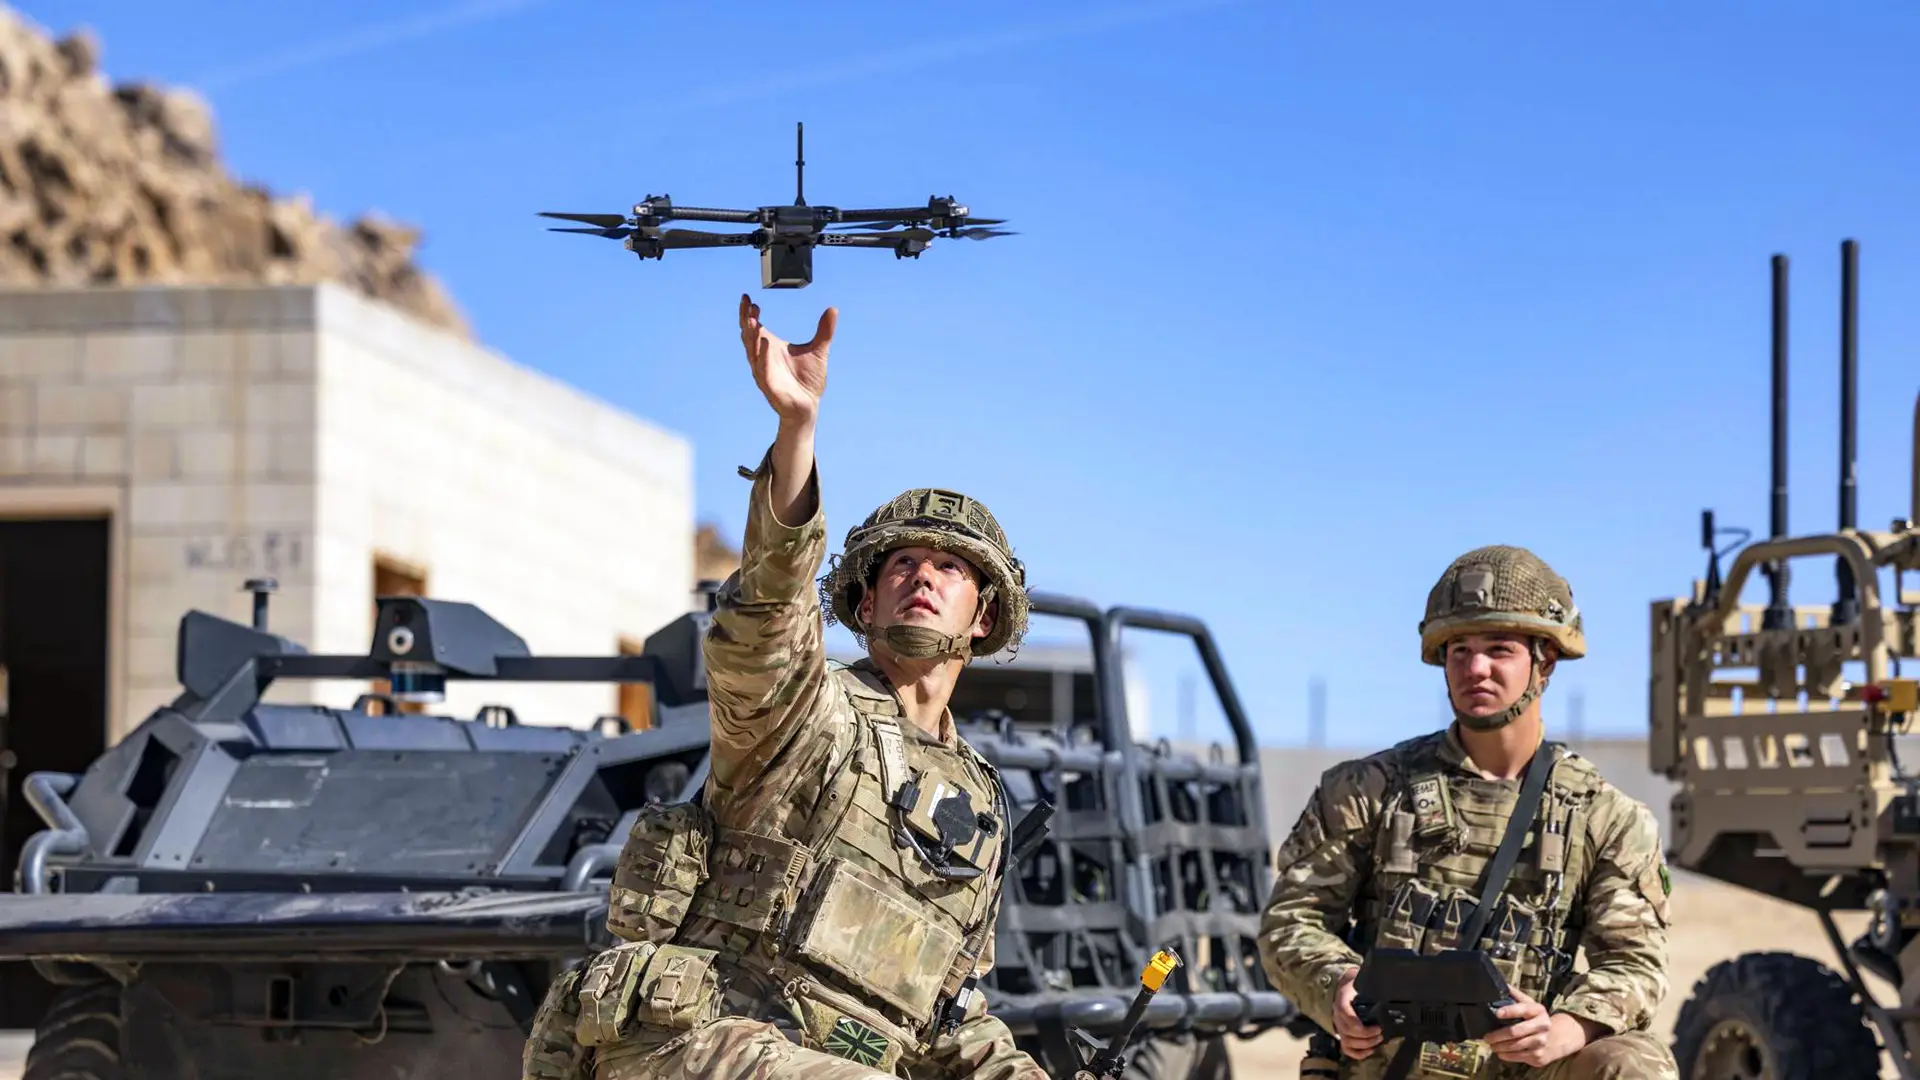 The U.S. Army has a new RQ-28A drone based on the Skydio X2D